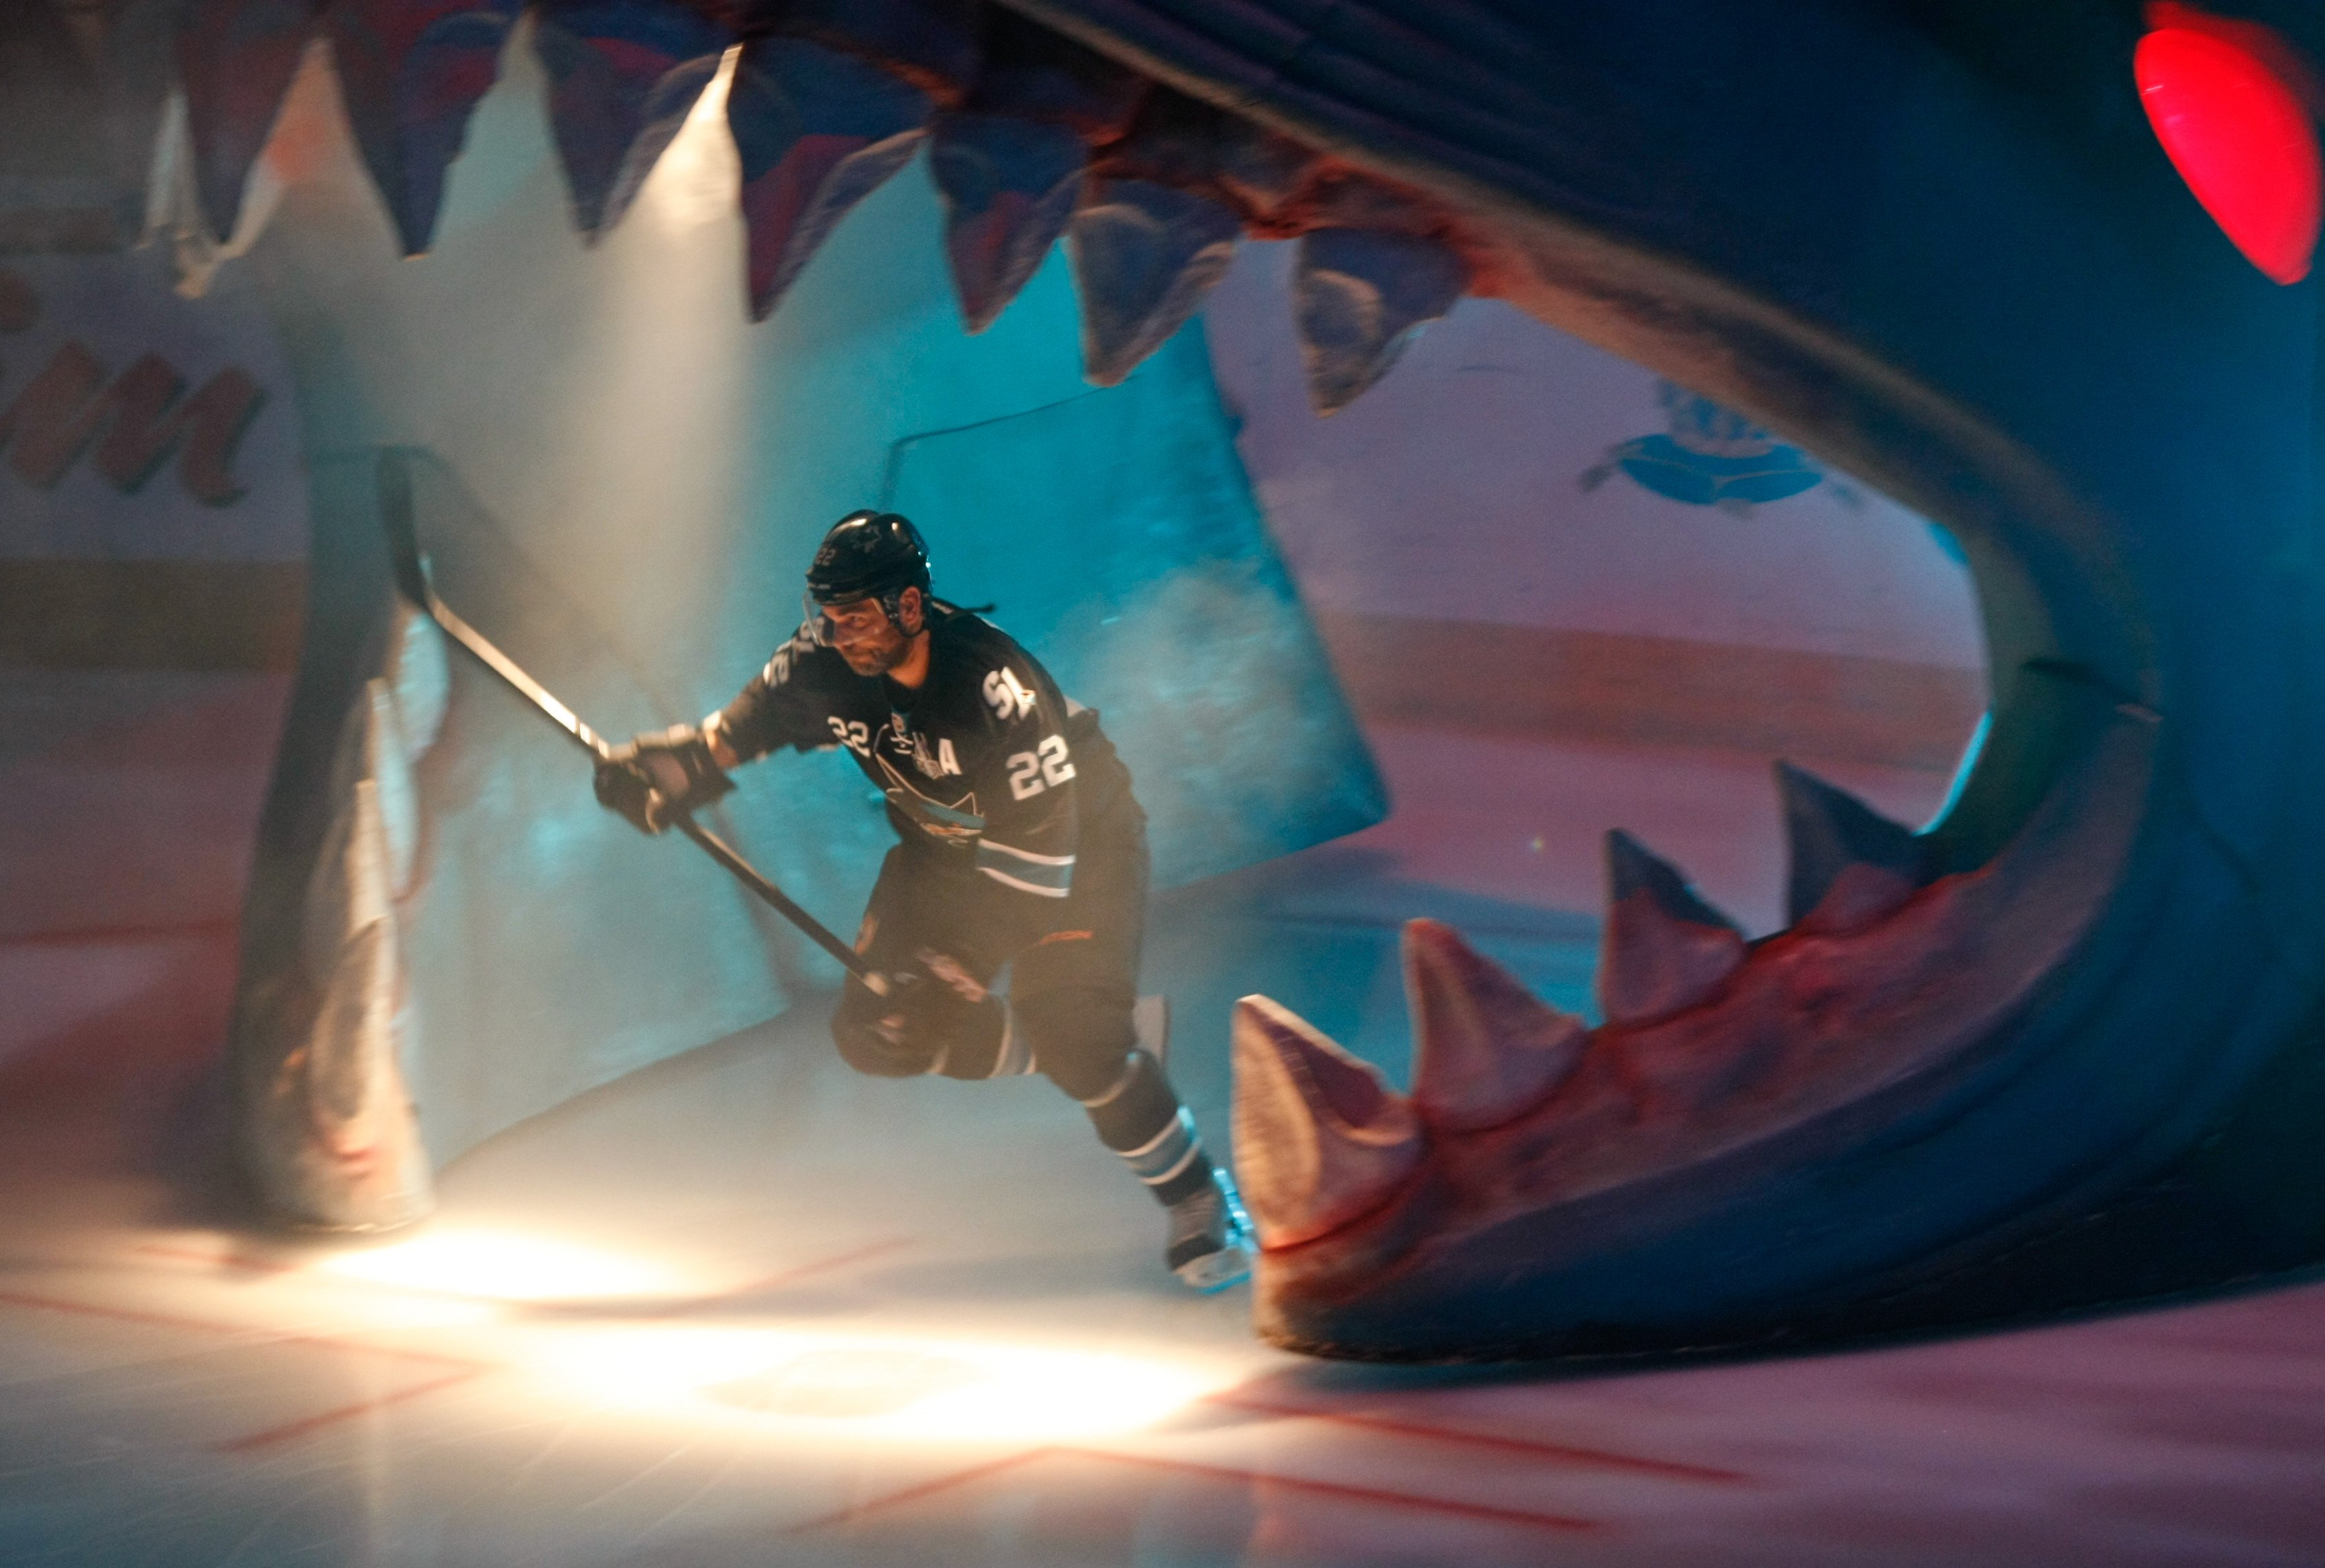 San Jose Sharks Hockey Nhl Wallpaper